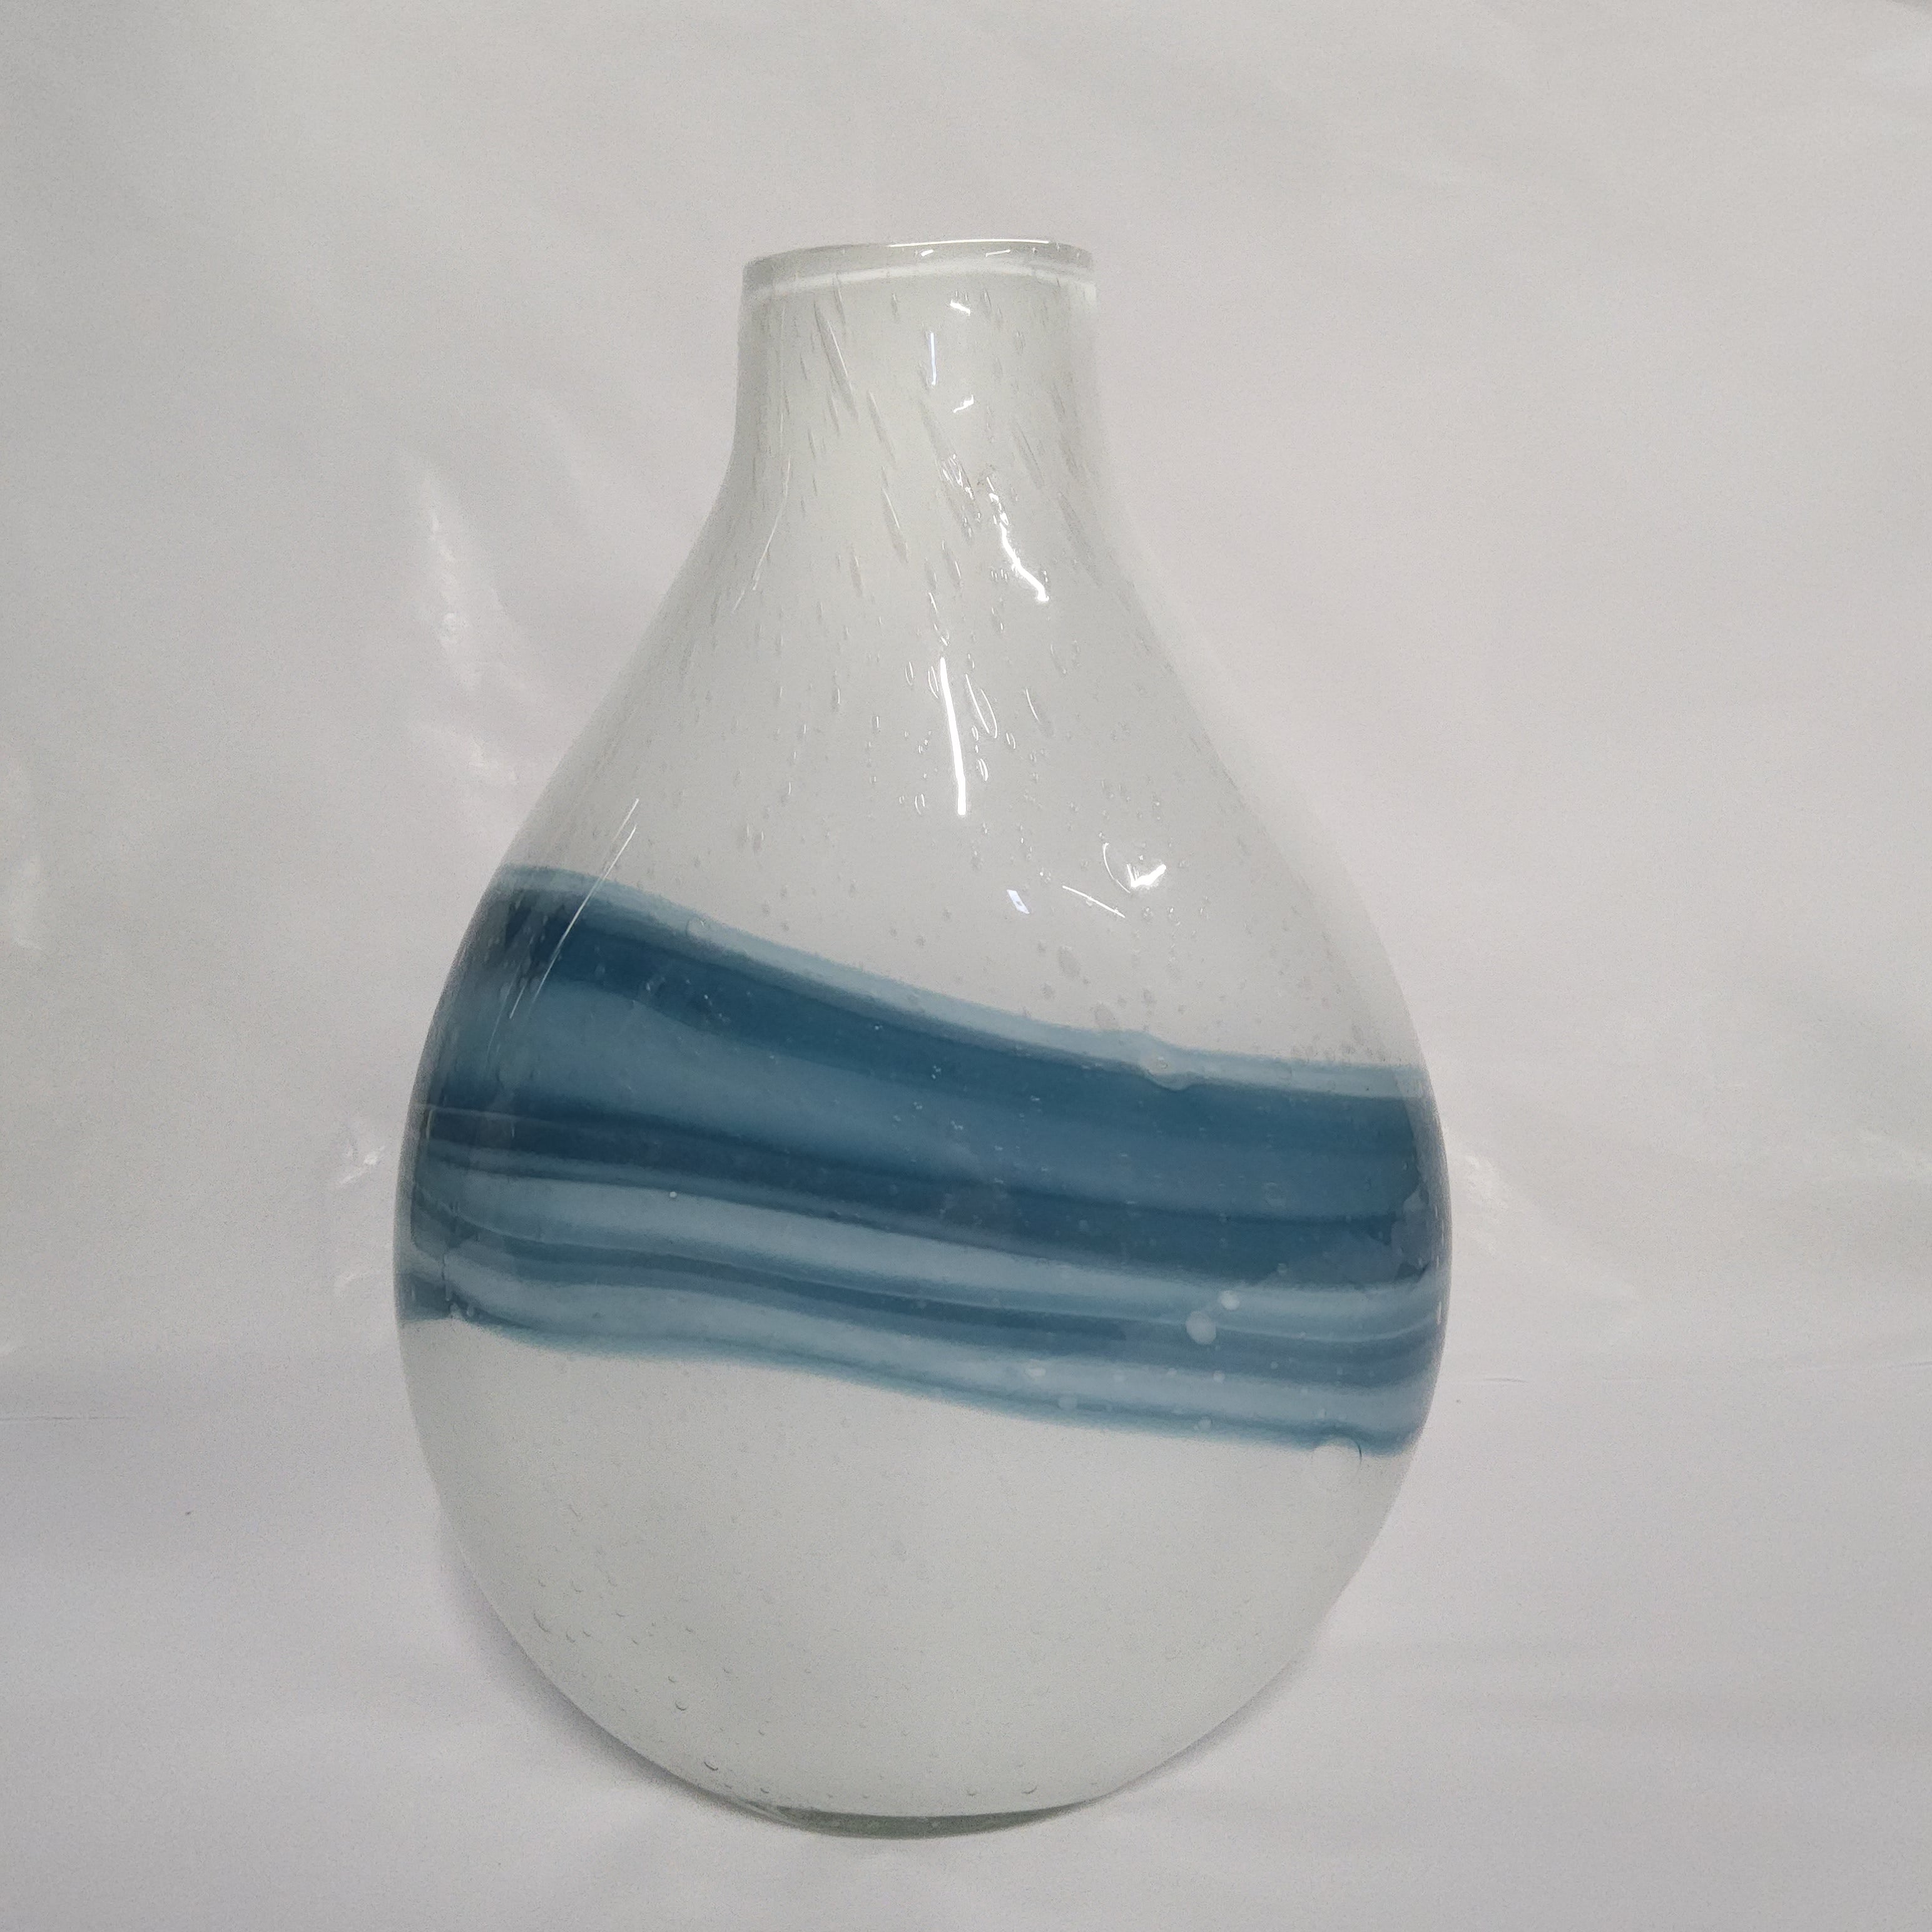 Glass Bulb Vase - Andrea Swirl - Blue and White